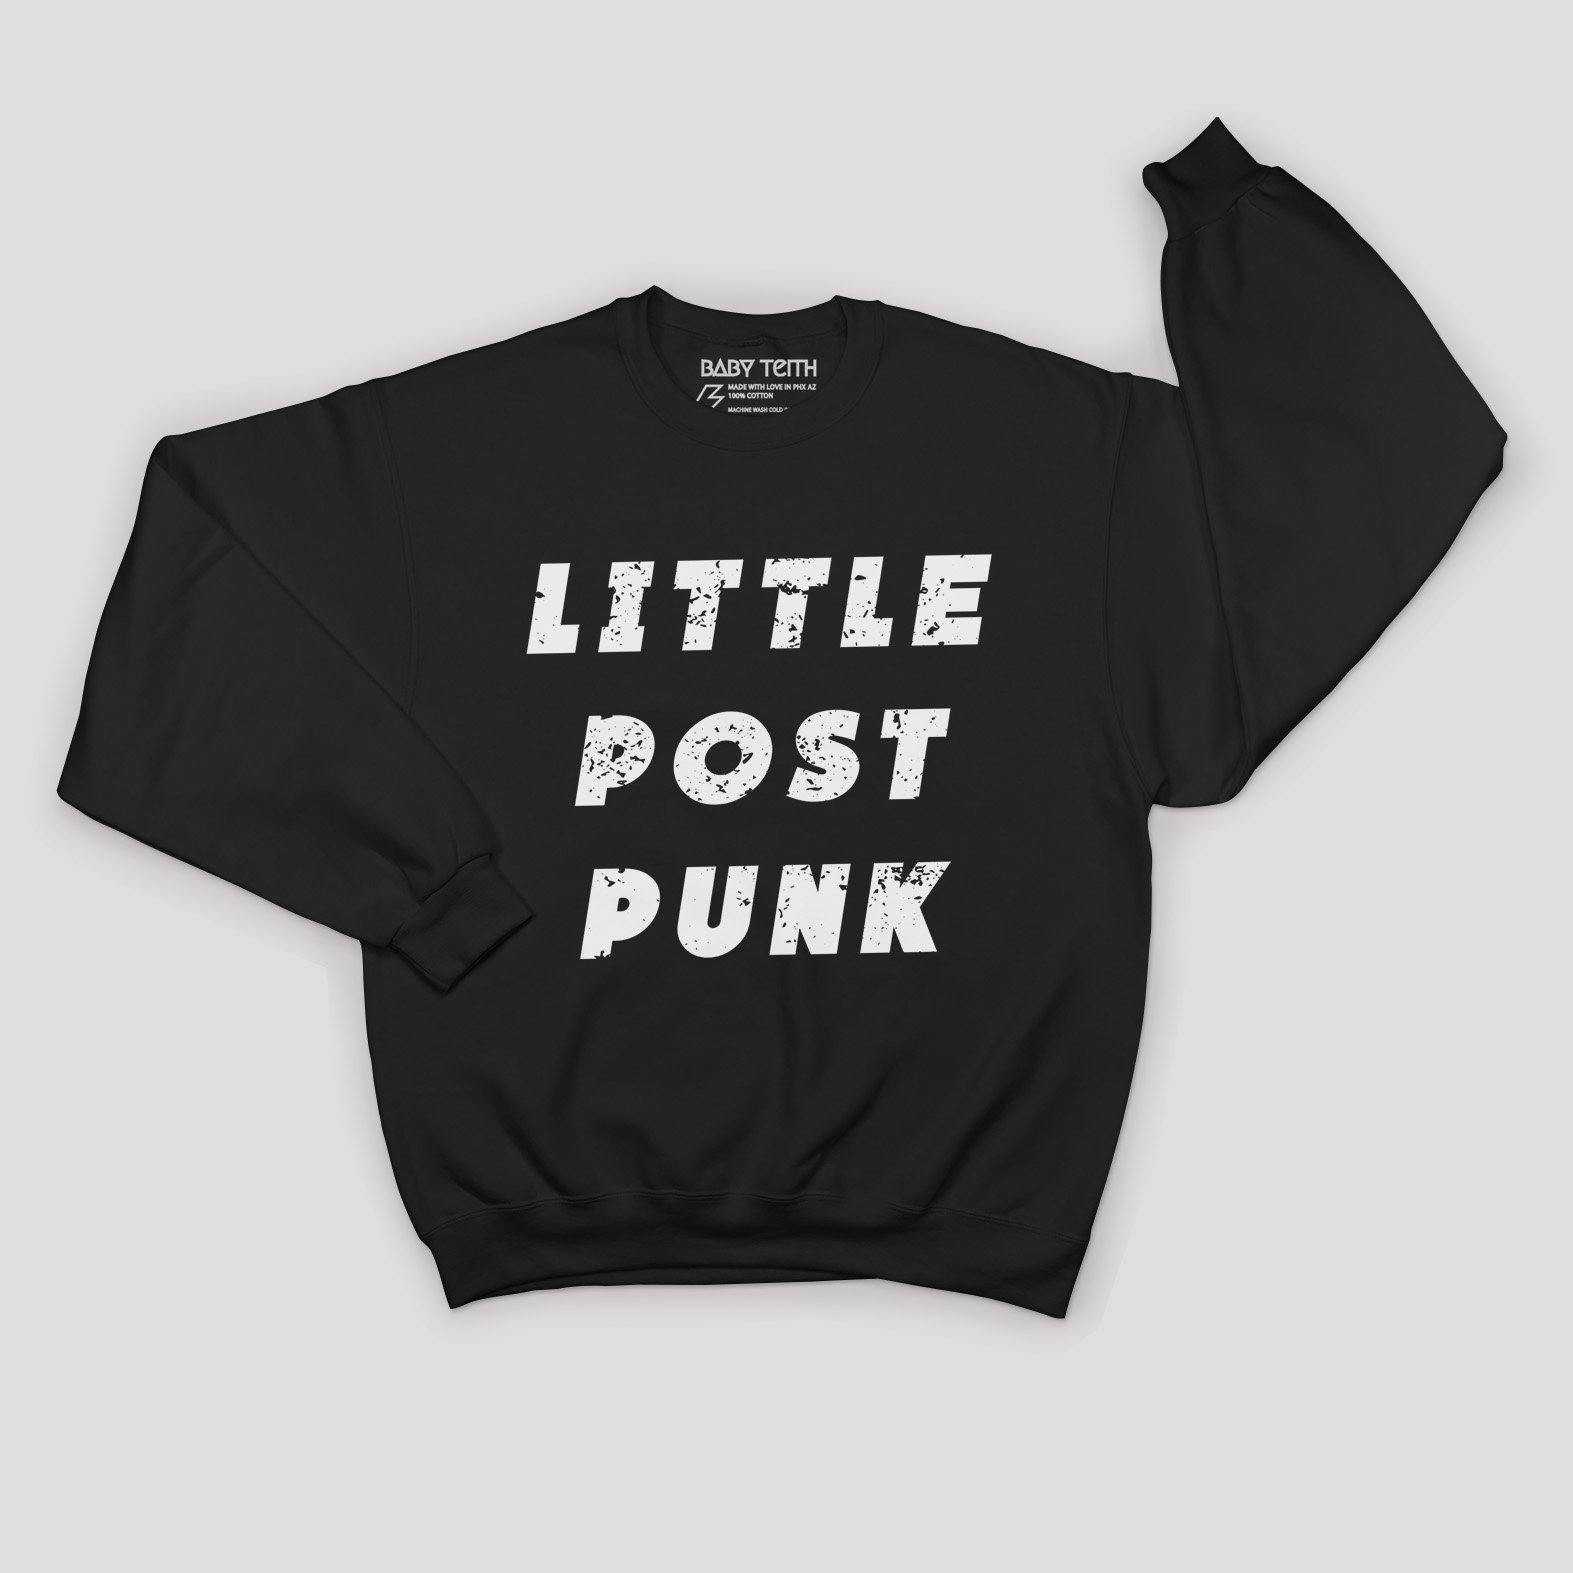 &quot;Little Post Punk&quot; Sweatshirt for Kids - Baby Teith